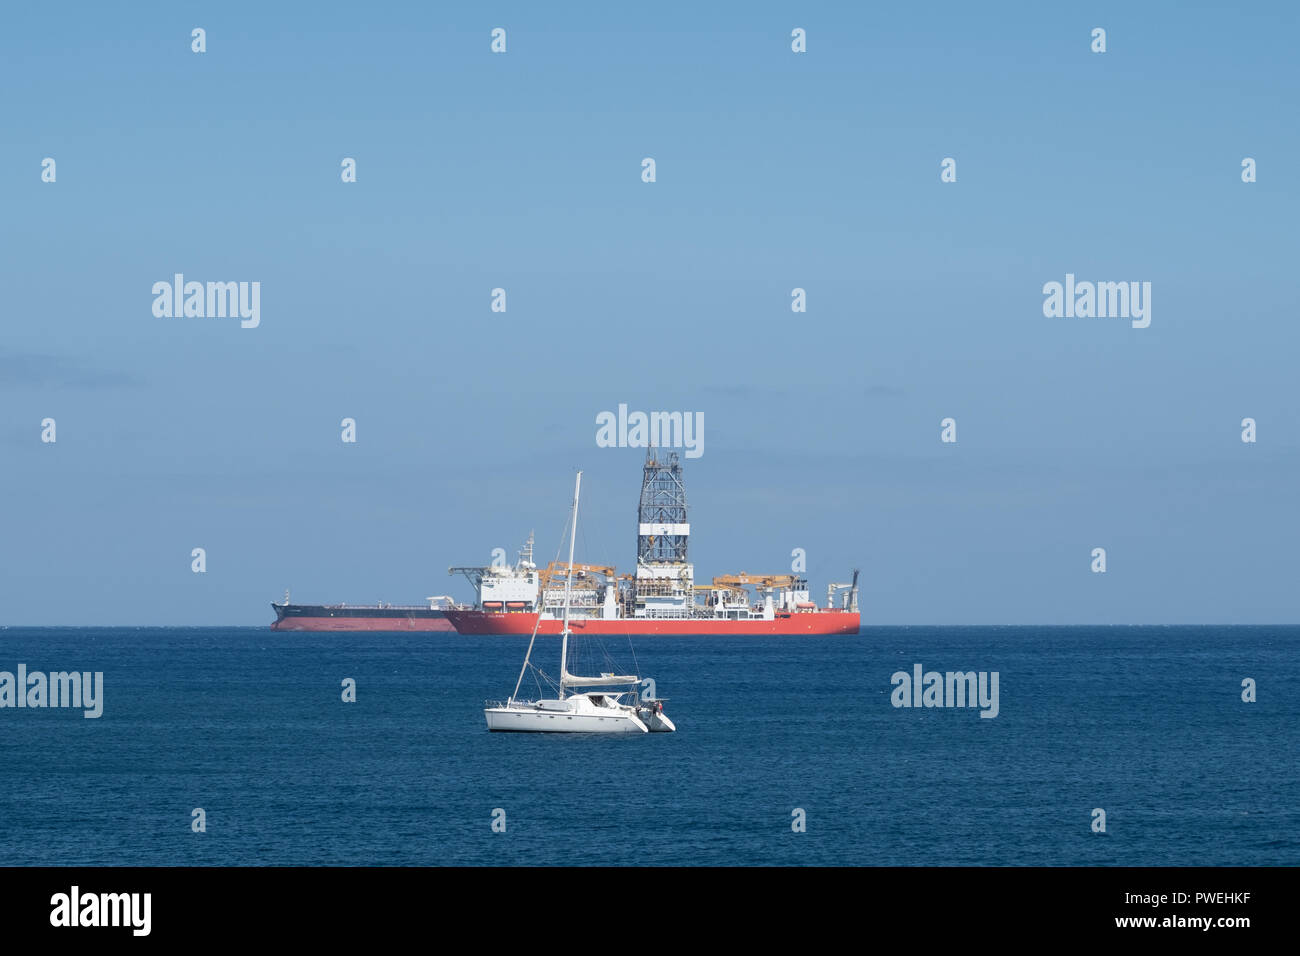 sailing boat, drilling ship and tanker on ocean horizon Stock Photo